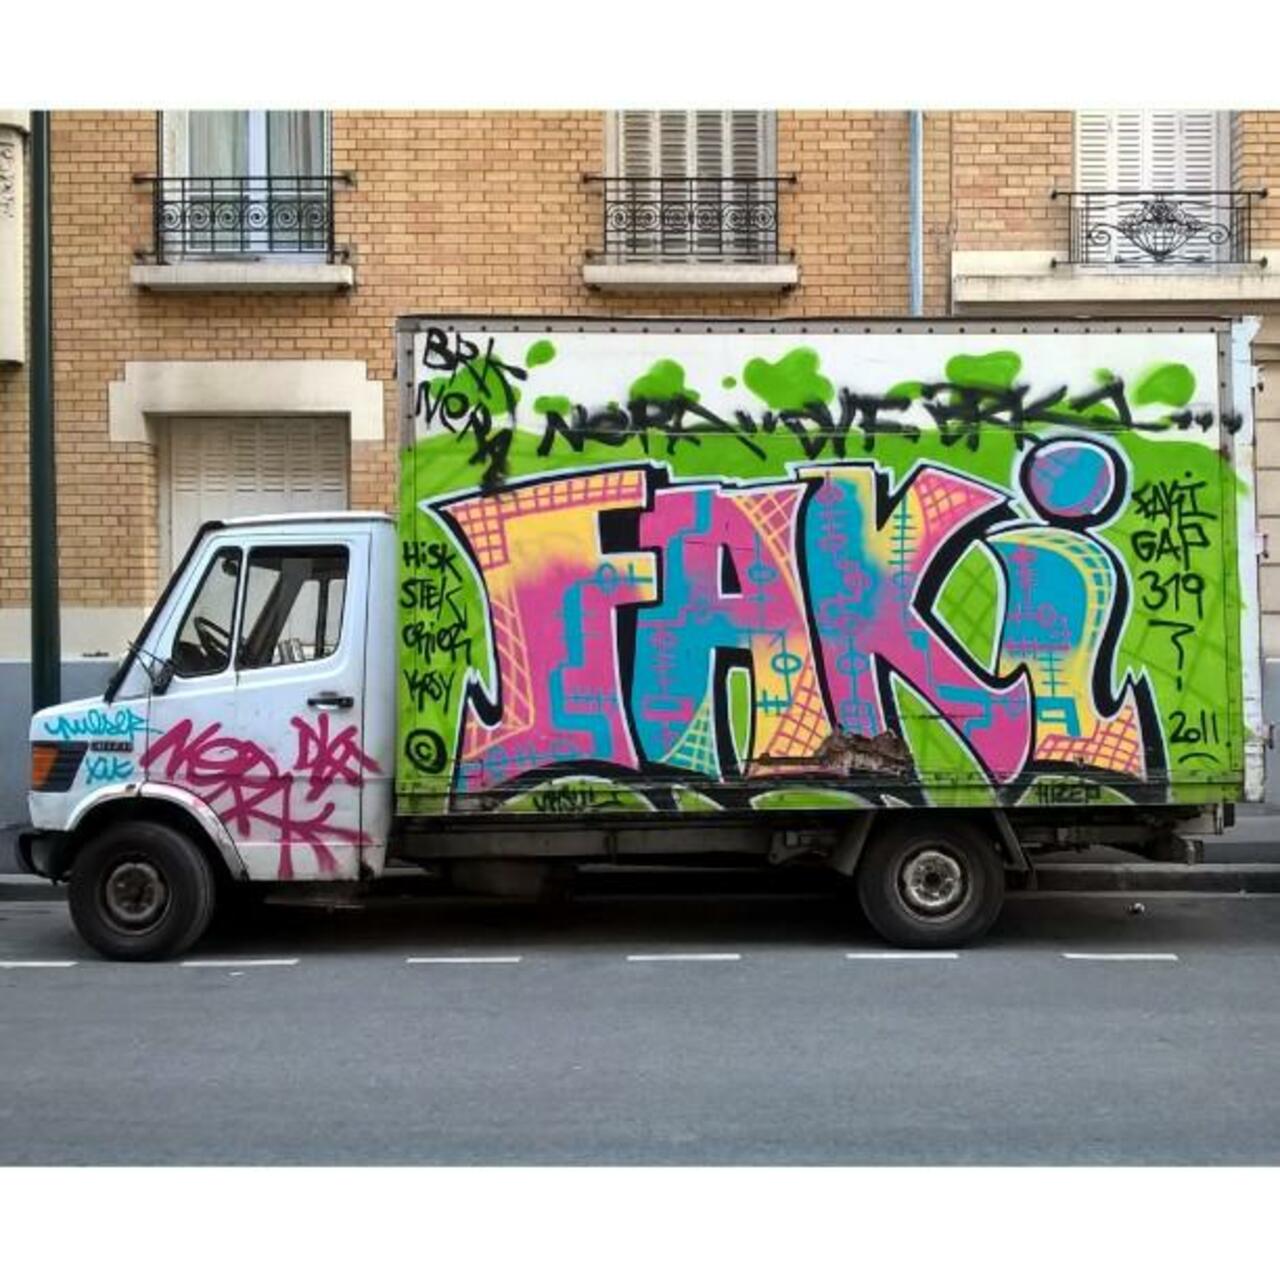 #Paris #graffiti photo by @maxdimontemarciano http://ift.tt/1jlA9Ra #StreetArt http://t.co/fEEvMoX4IG